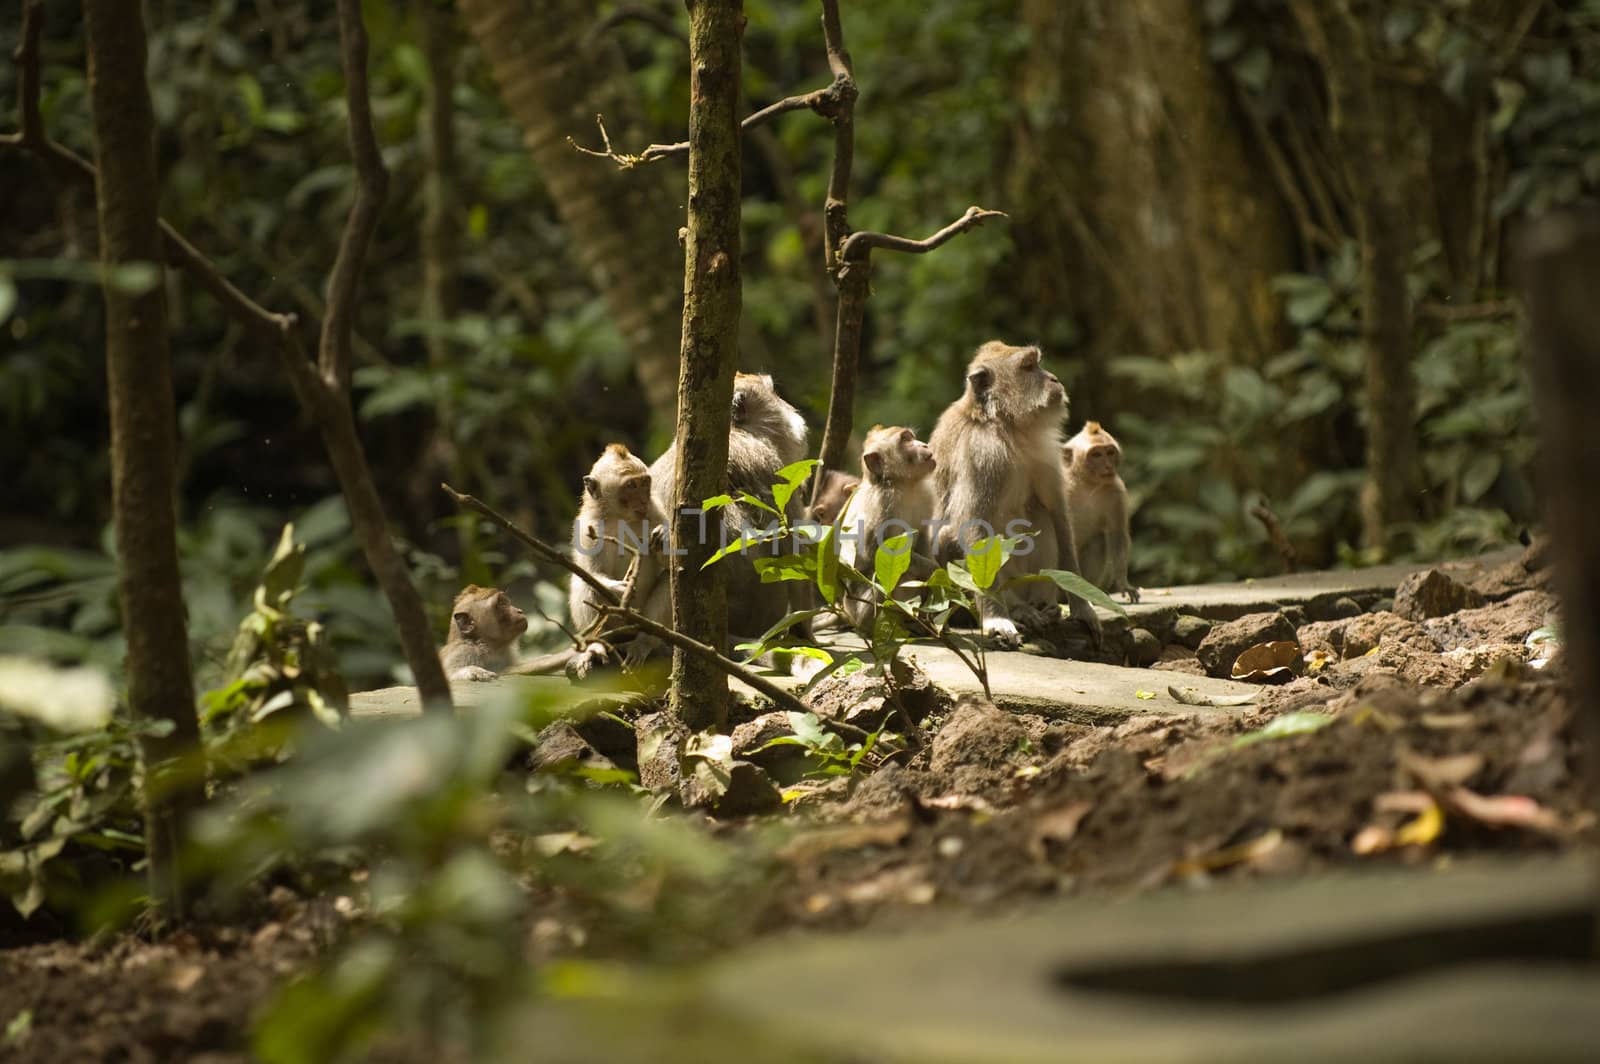 Group of monkeys in Bali's Ubud Monkey City